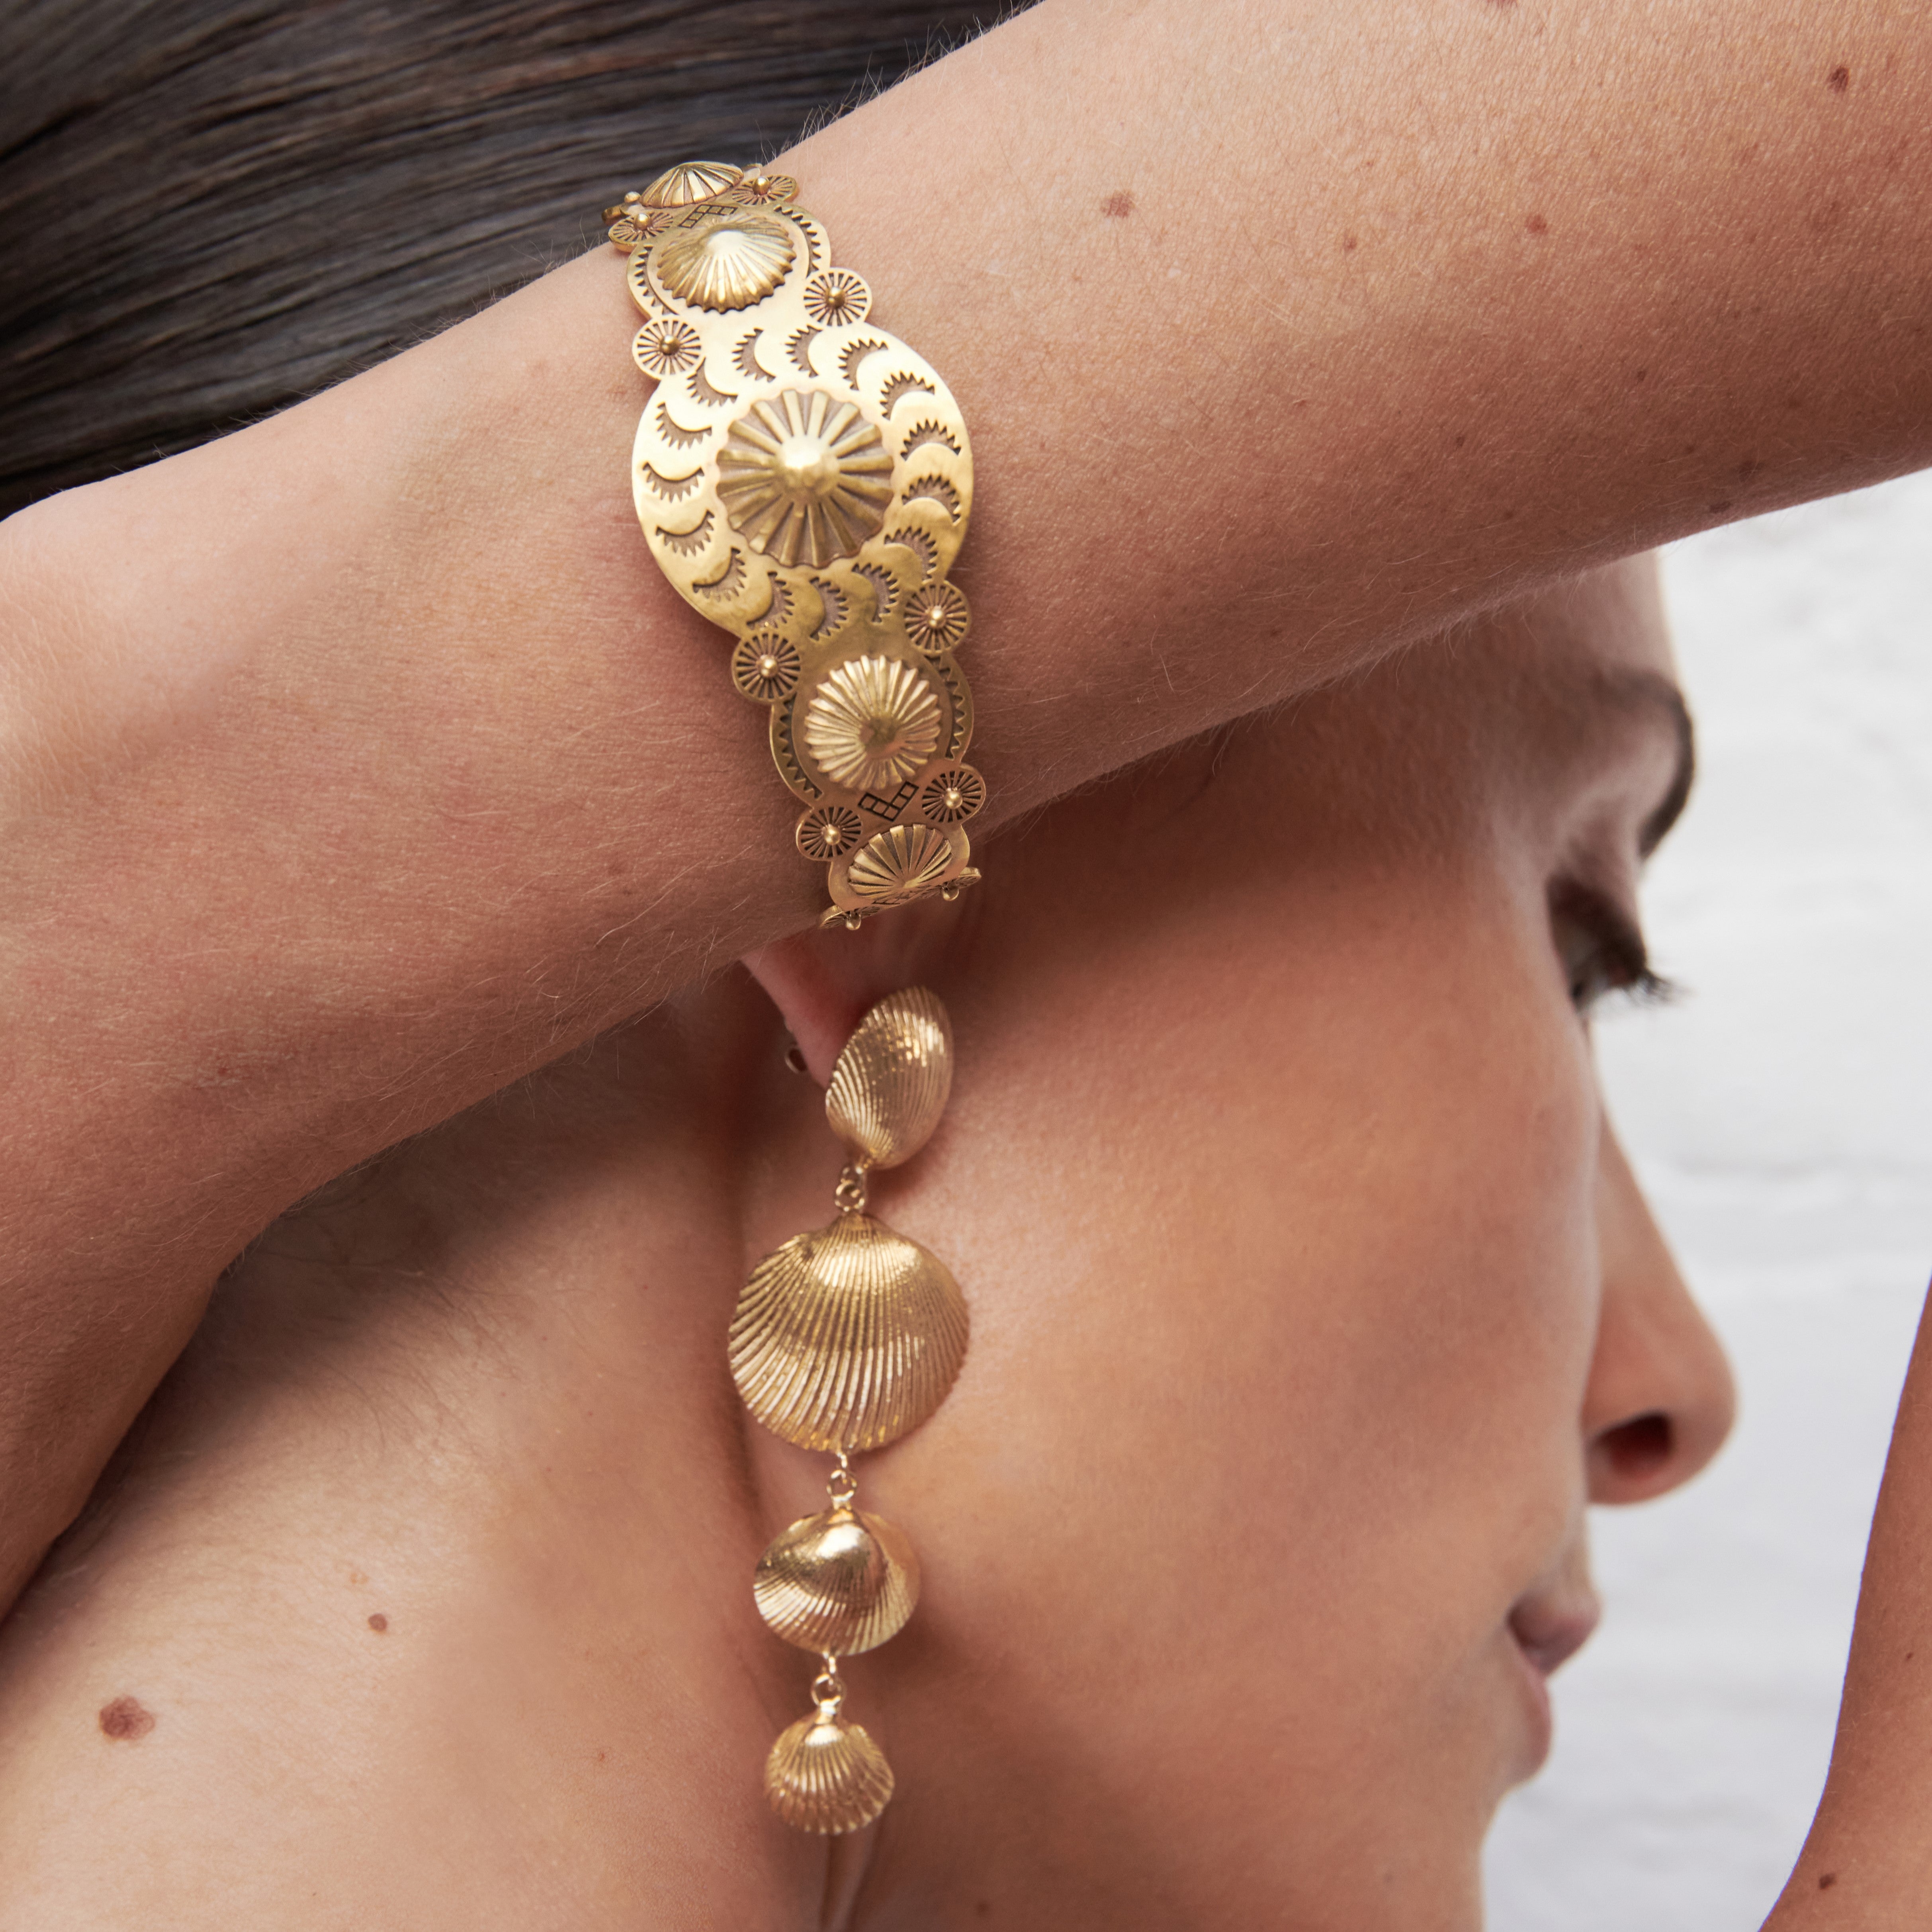 A woman wearing a Cadar yellow gold cuff bracelet and Cadar Four Shell drop earrings.